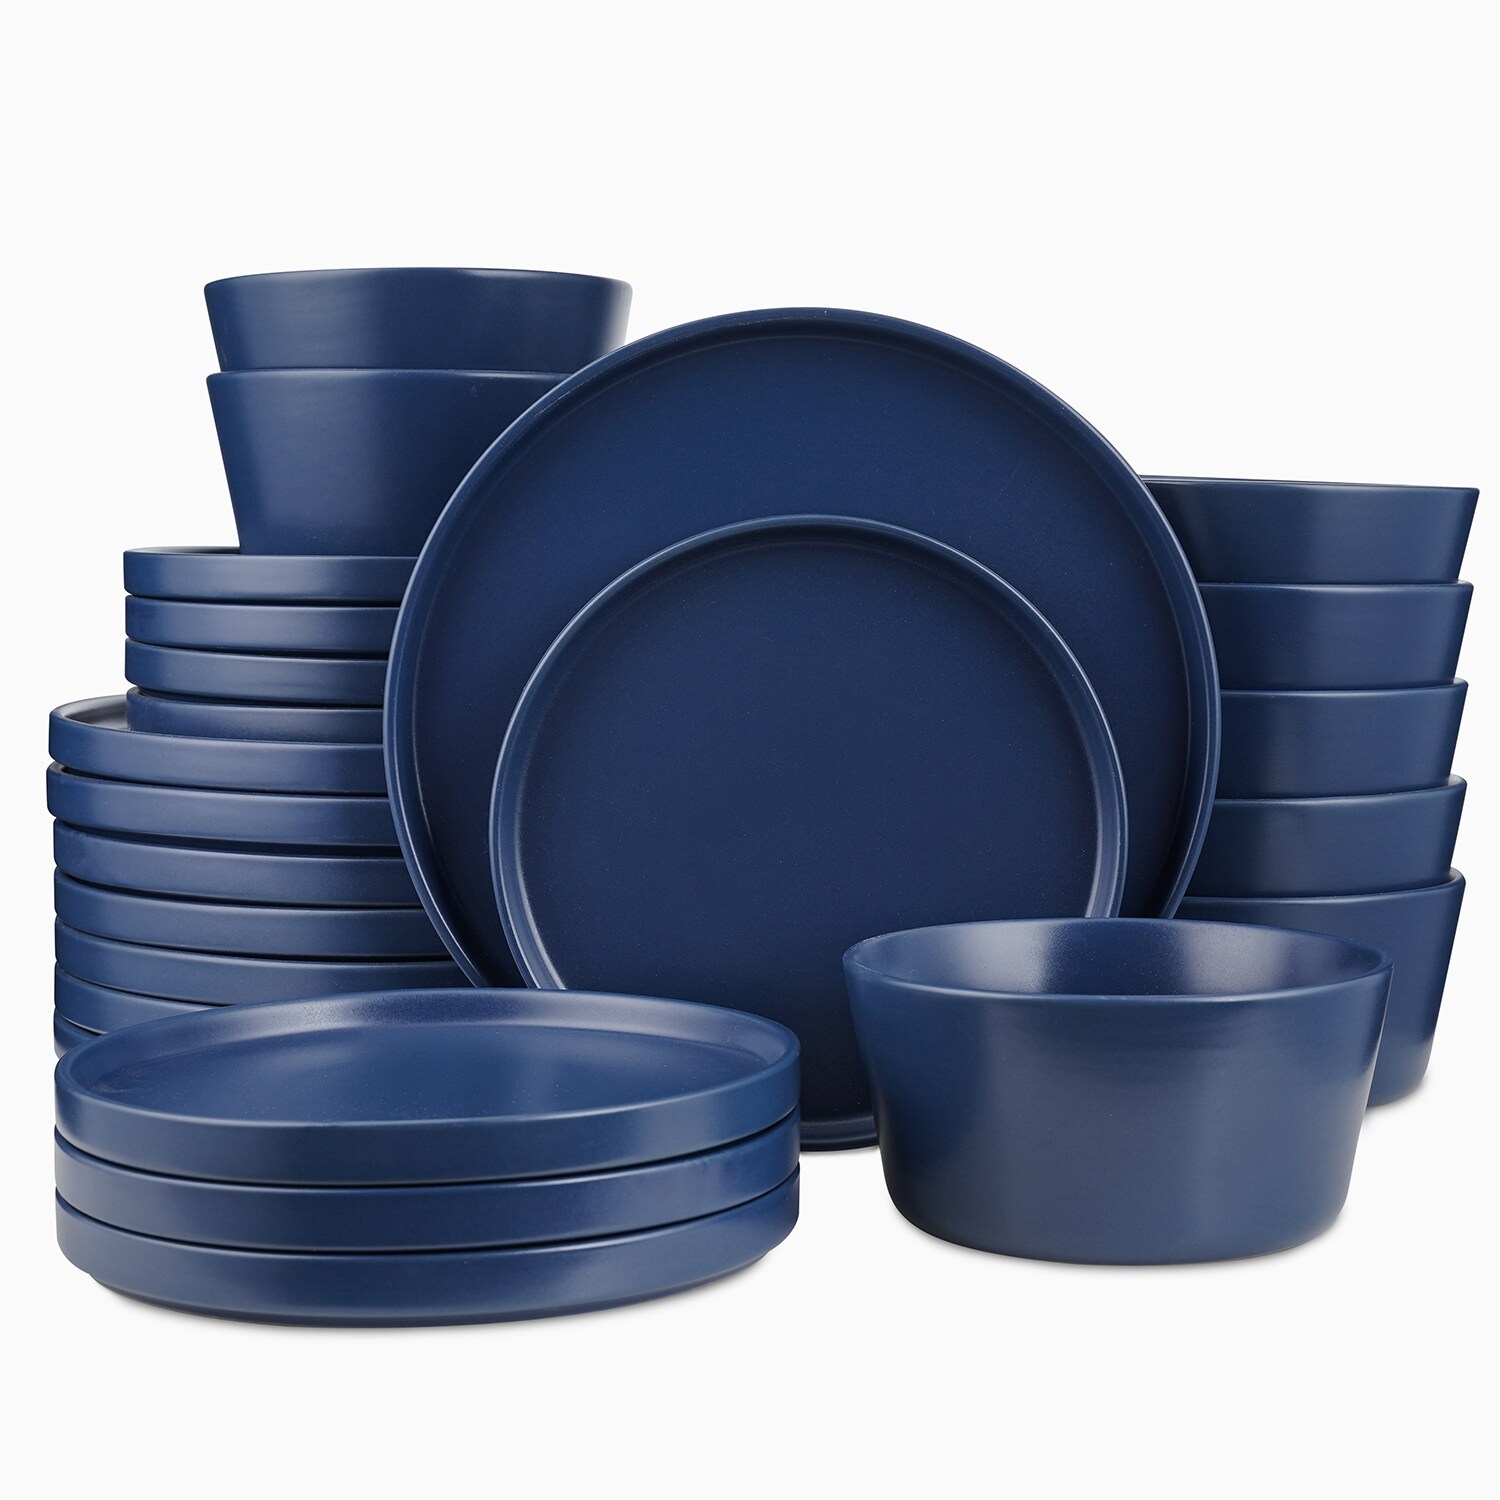 Azul Copper Switch Plates (24 Configurations) – Color Copper